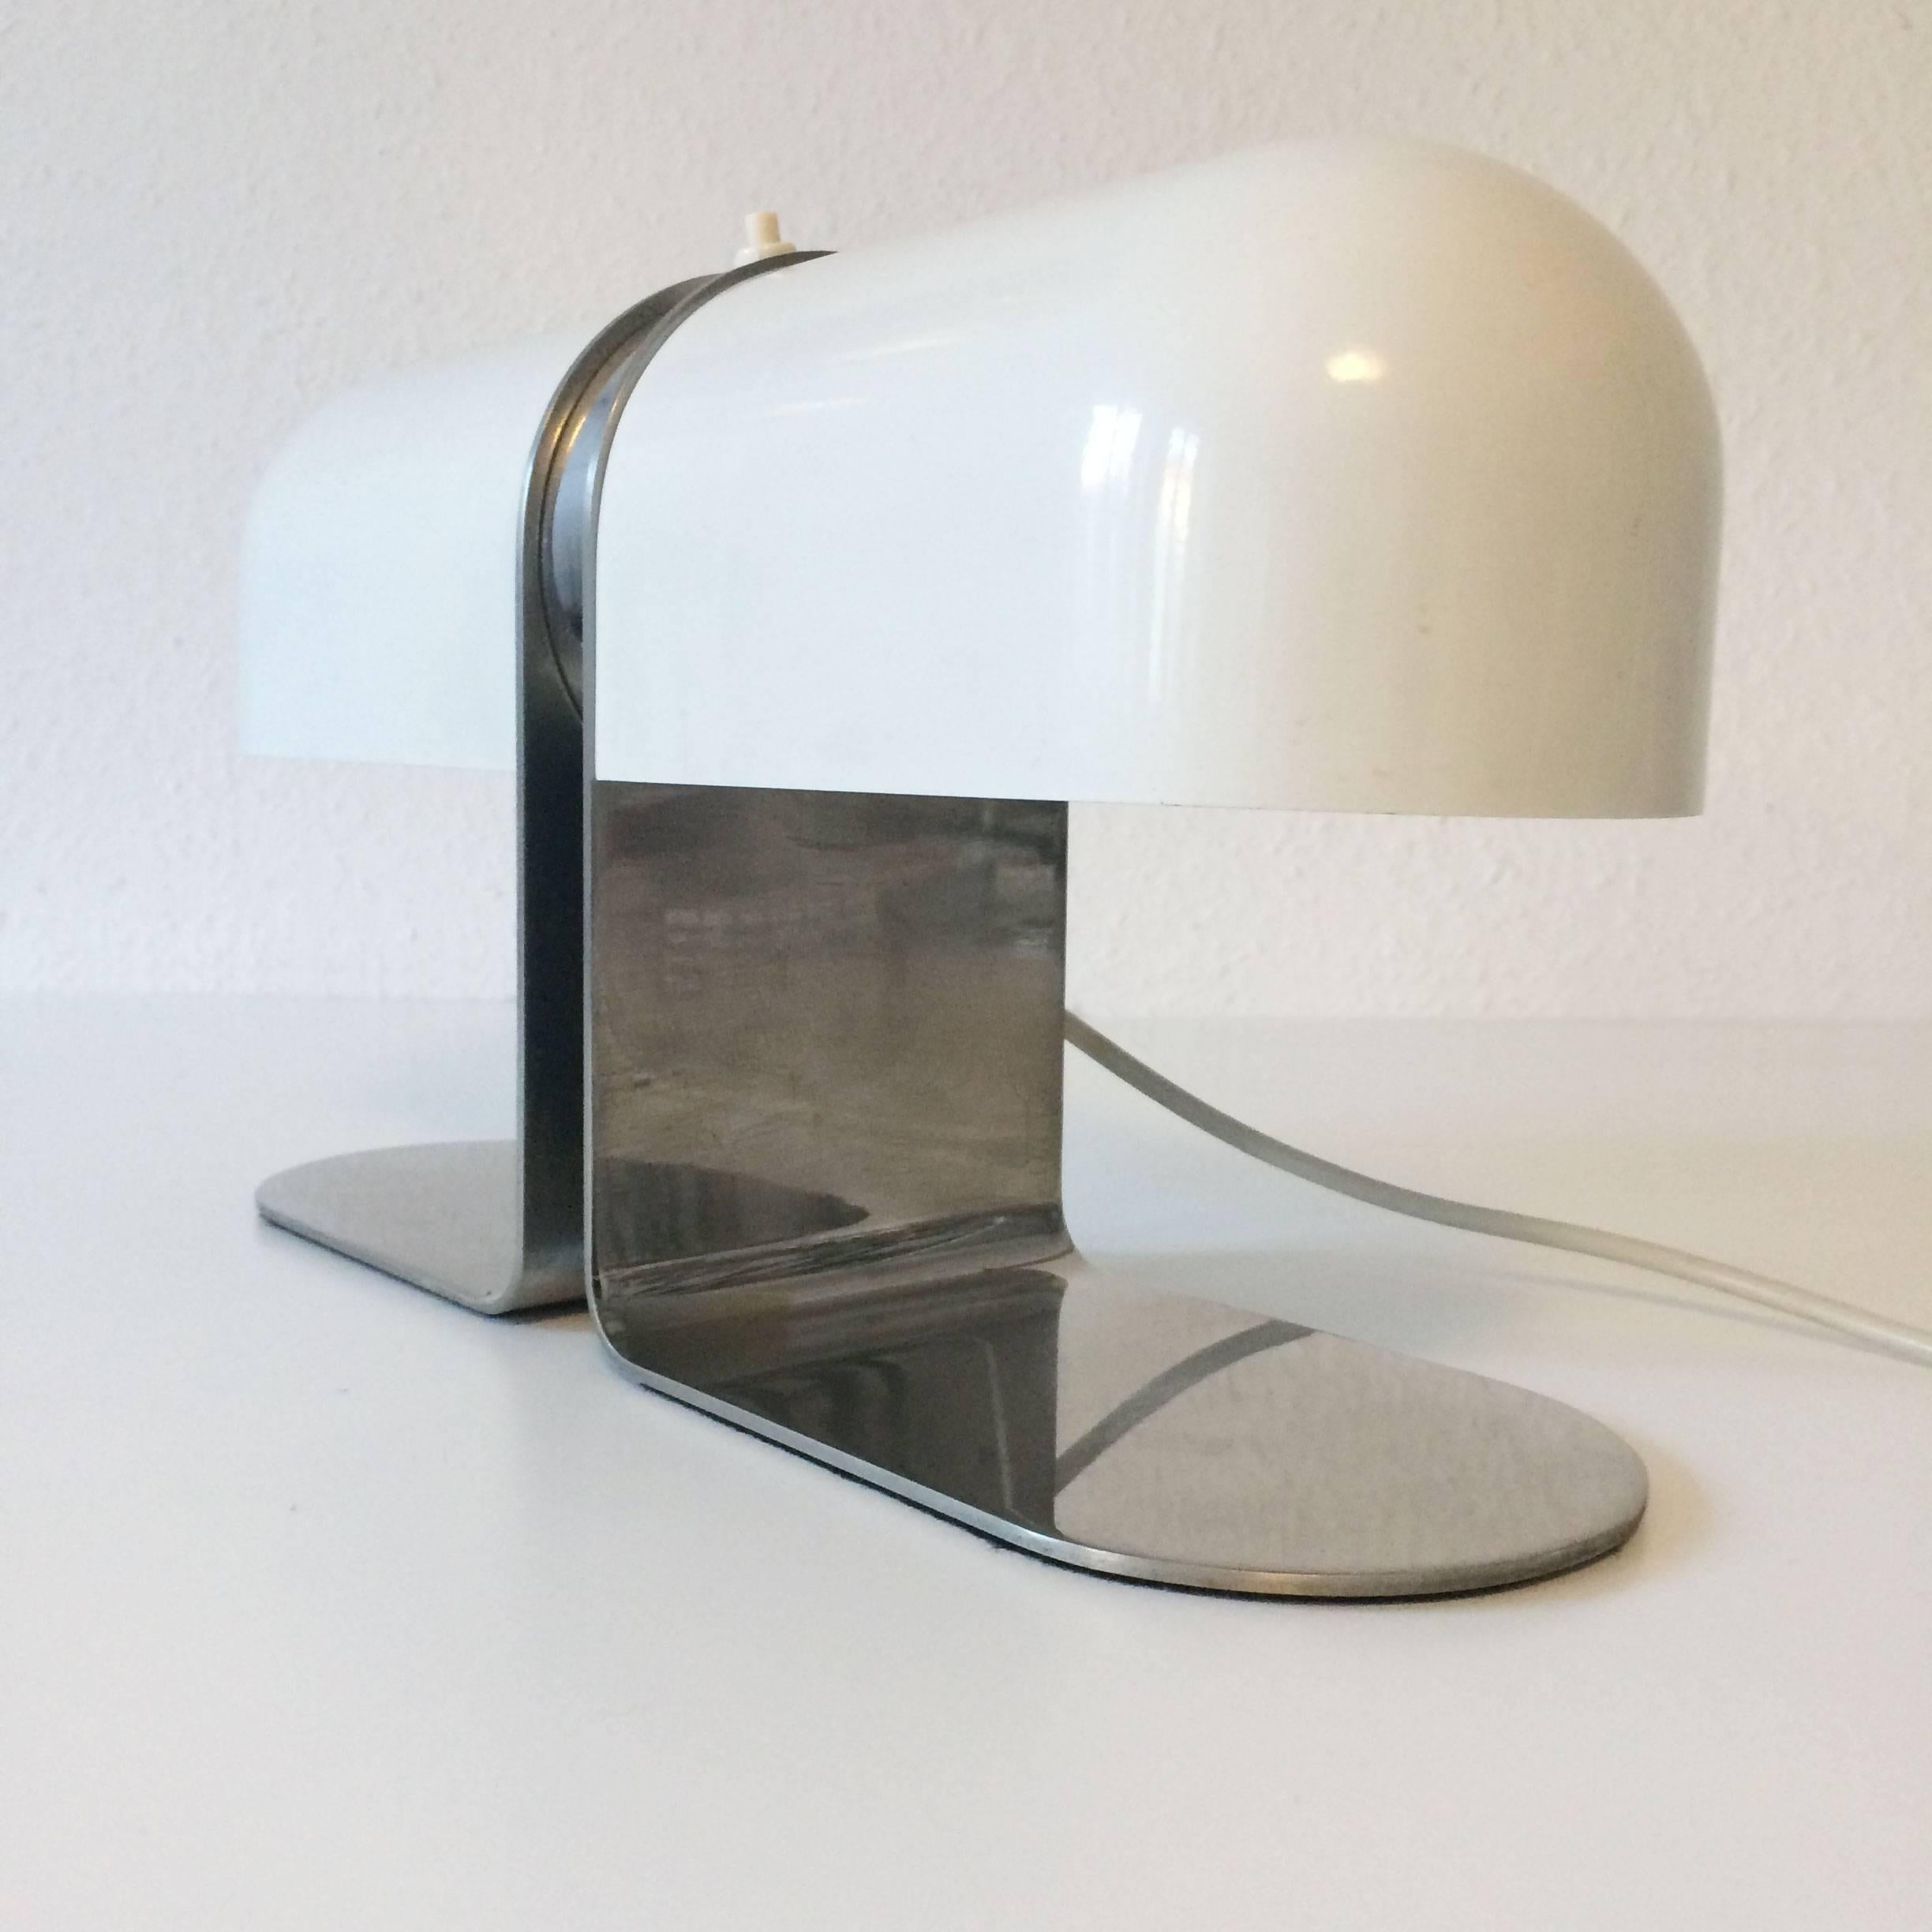 Enameled Rare Mid Century Modern Table Lamp or Desk Light by Andre Ricard for Metalarte For Sale